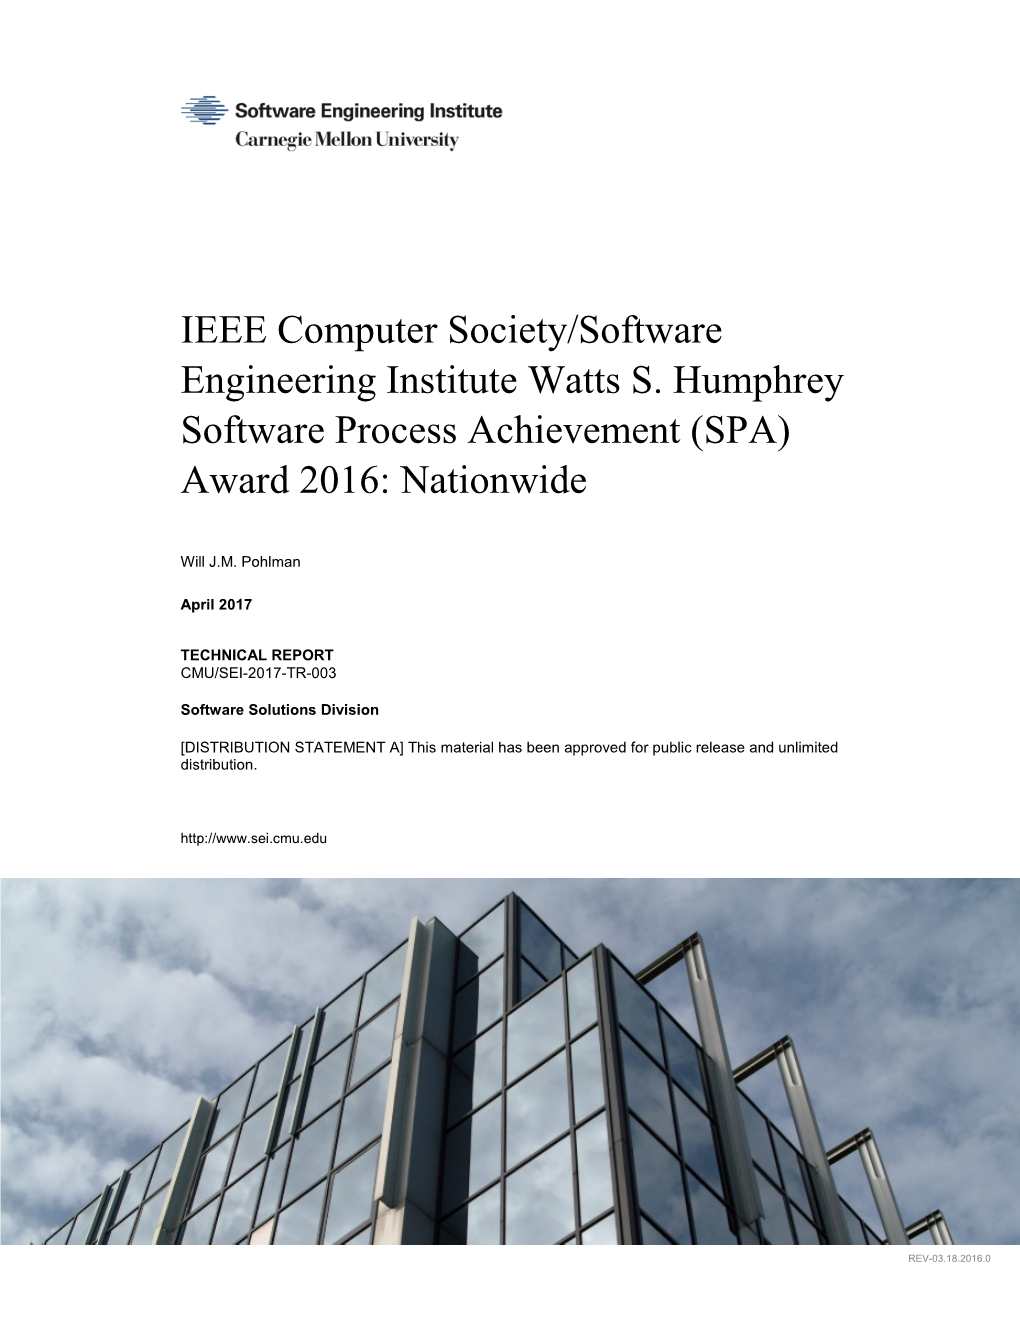 IEEE Computer Society/Software Engineering Institute Watts S. Humphrey Software Process Achievement (SPA) Award 2016: Nationwide